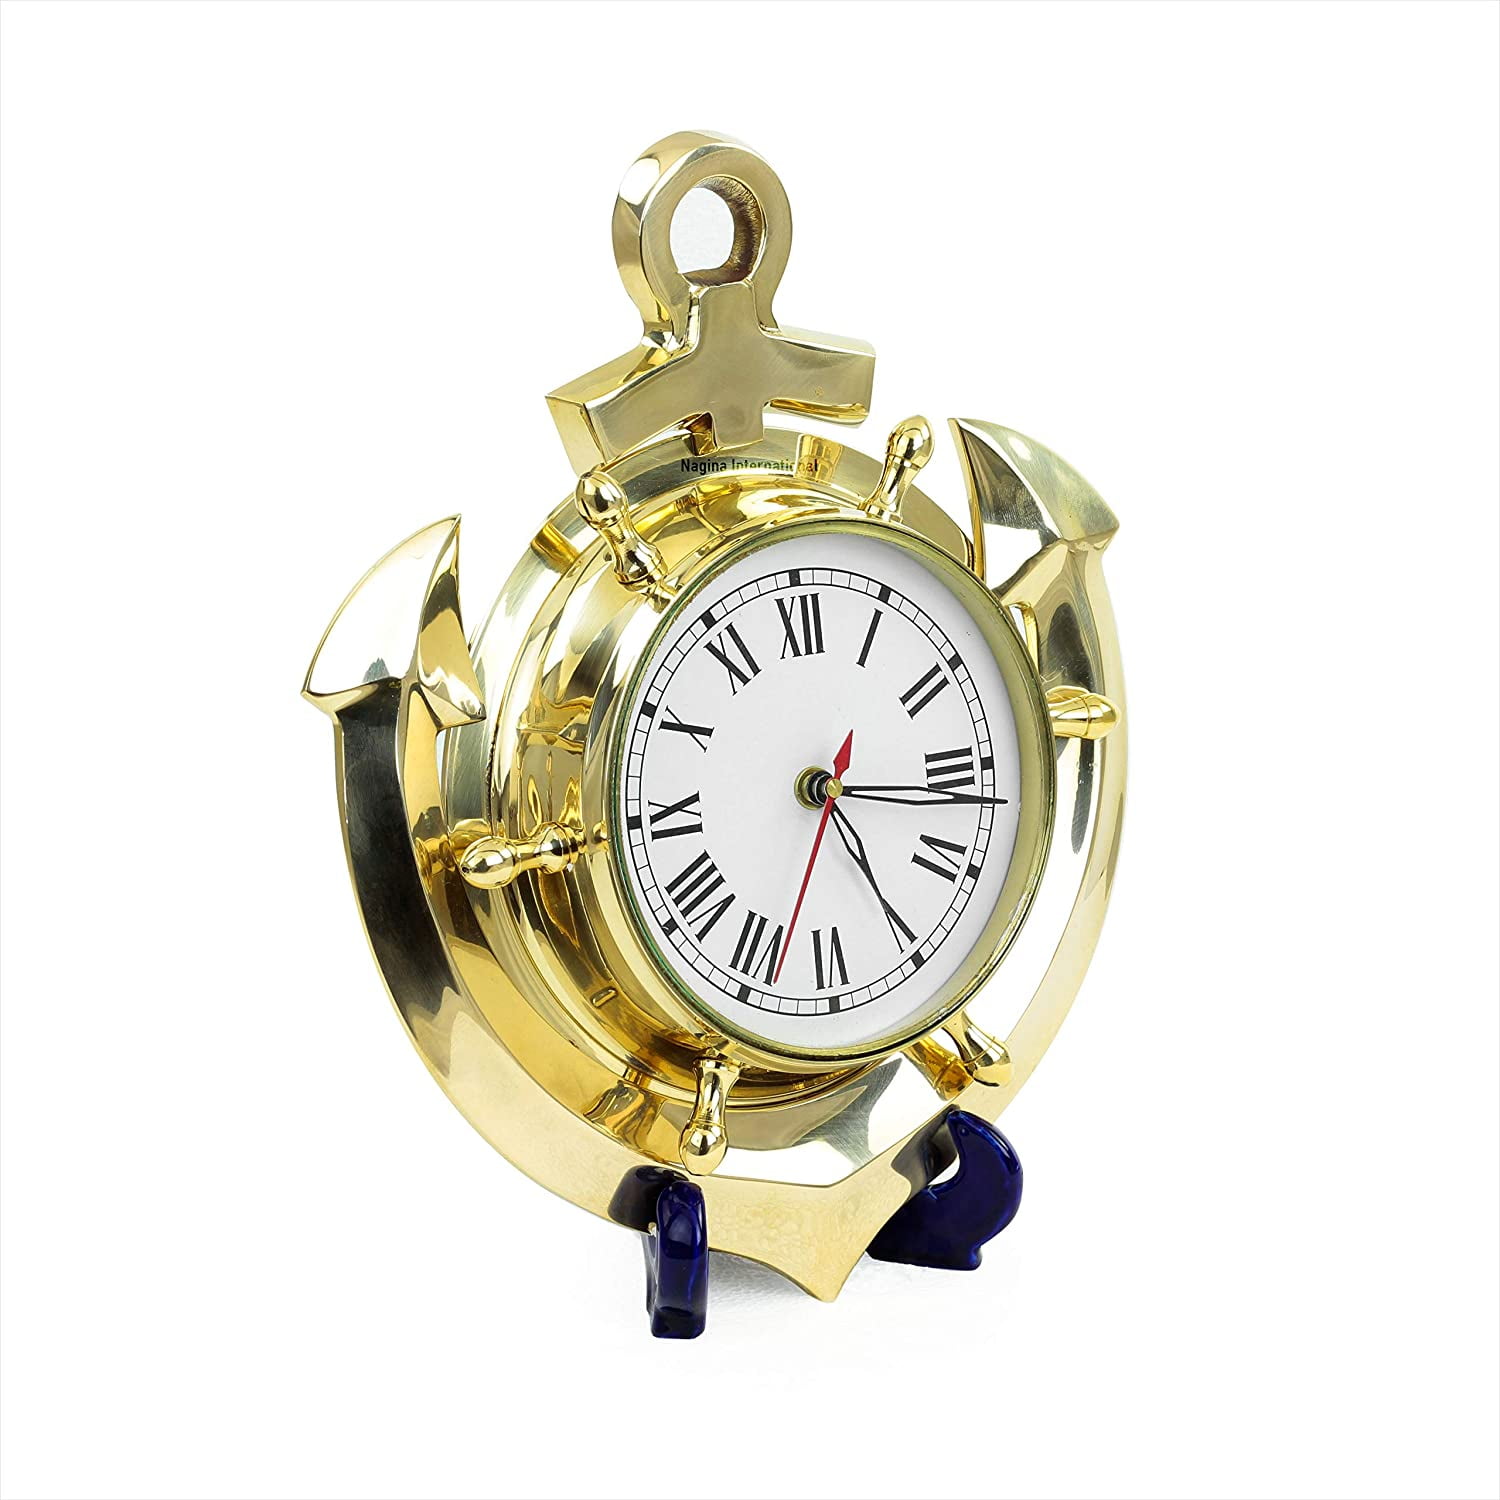 Nagina International Solid Brass Time's Wall Clock Anchor